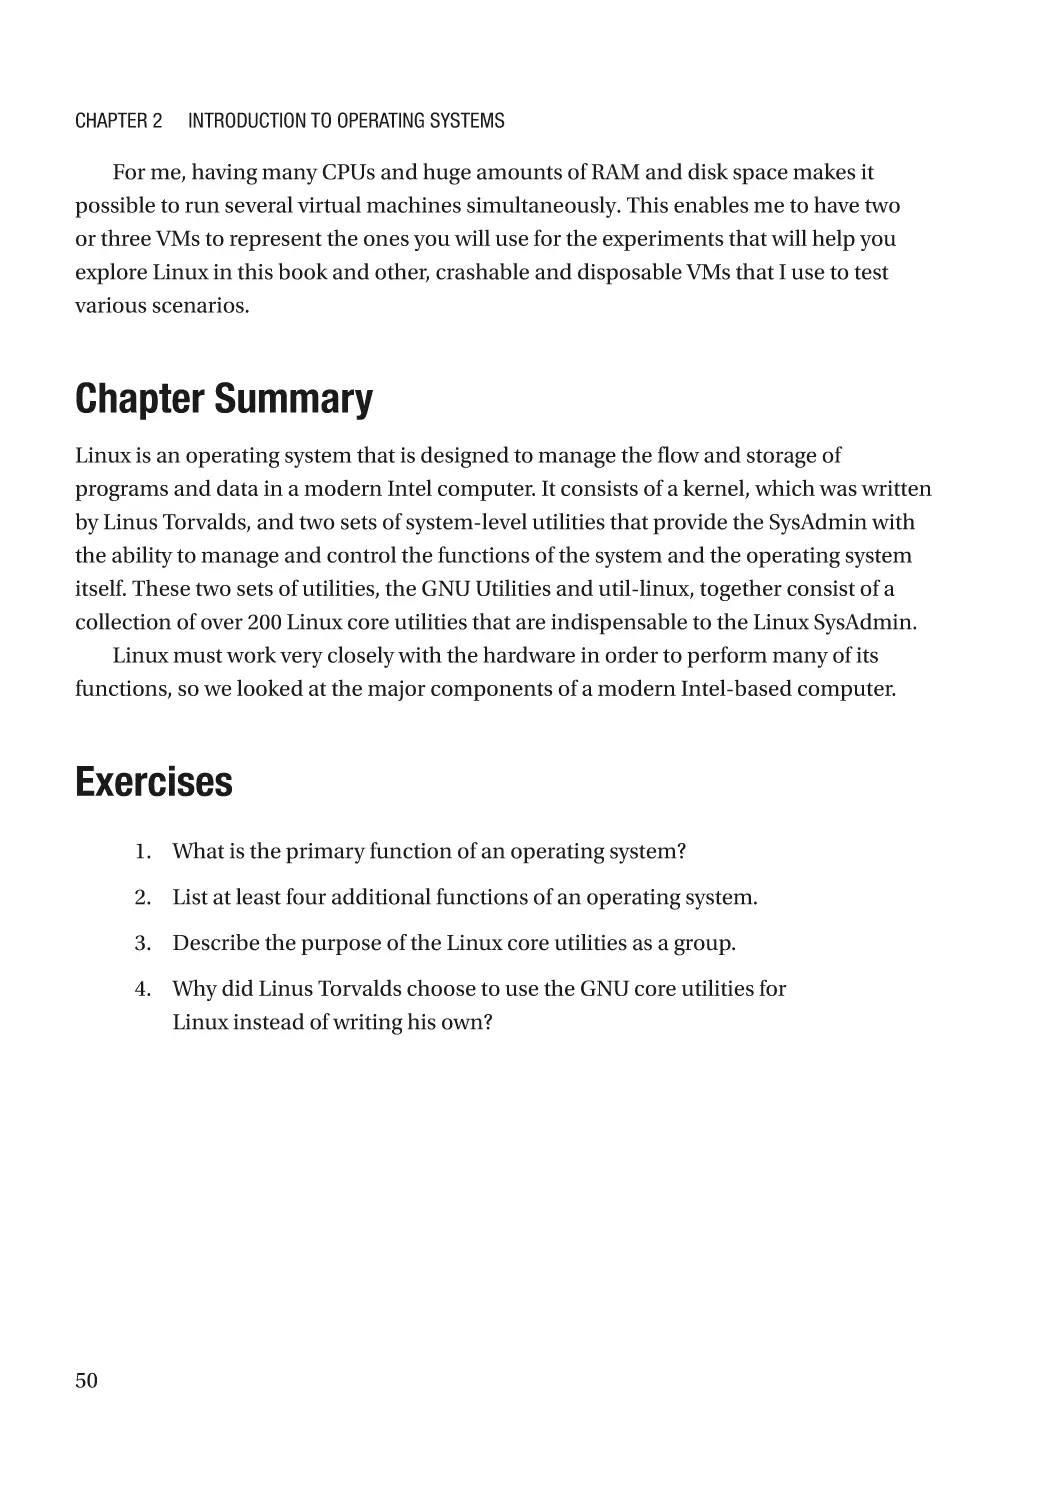 Chapter Summary
Exercises